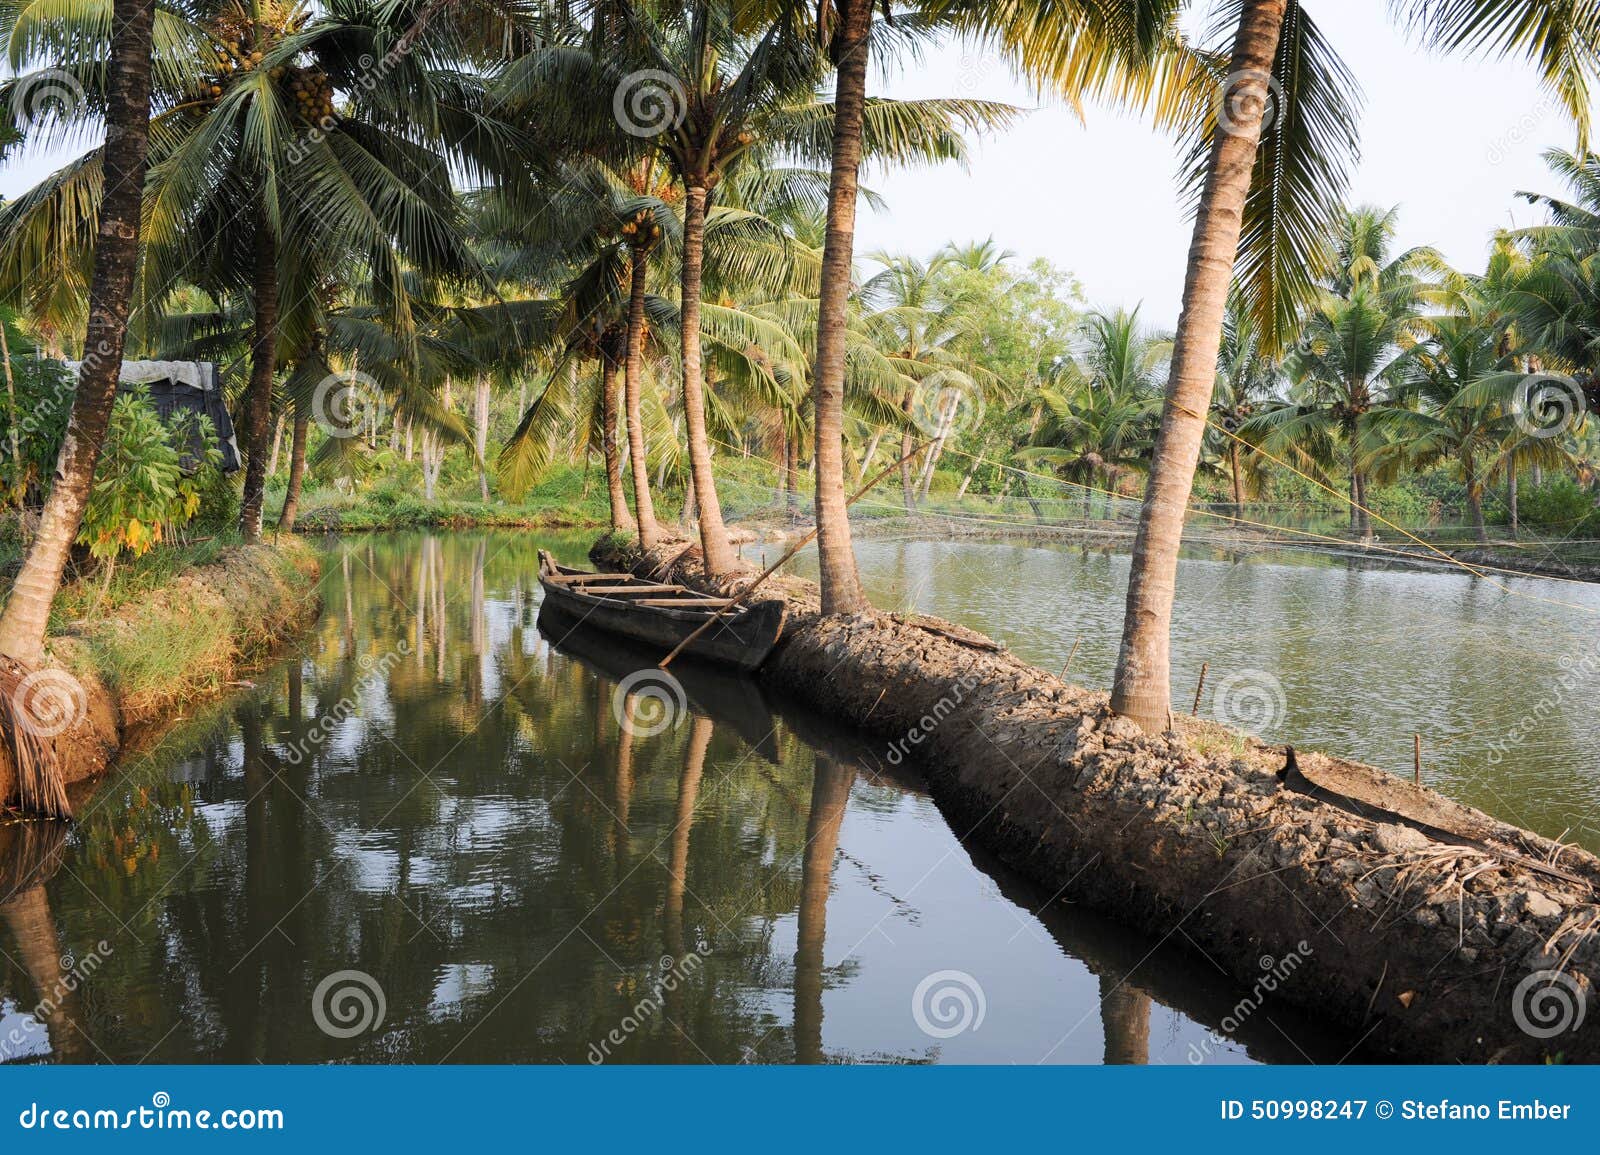 river of the backwaters at kollam